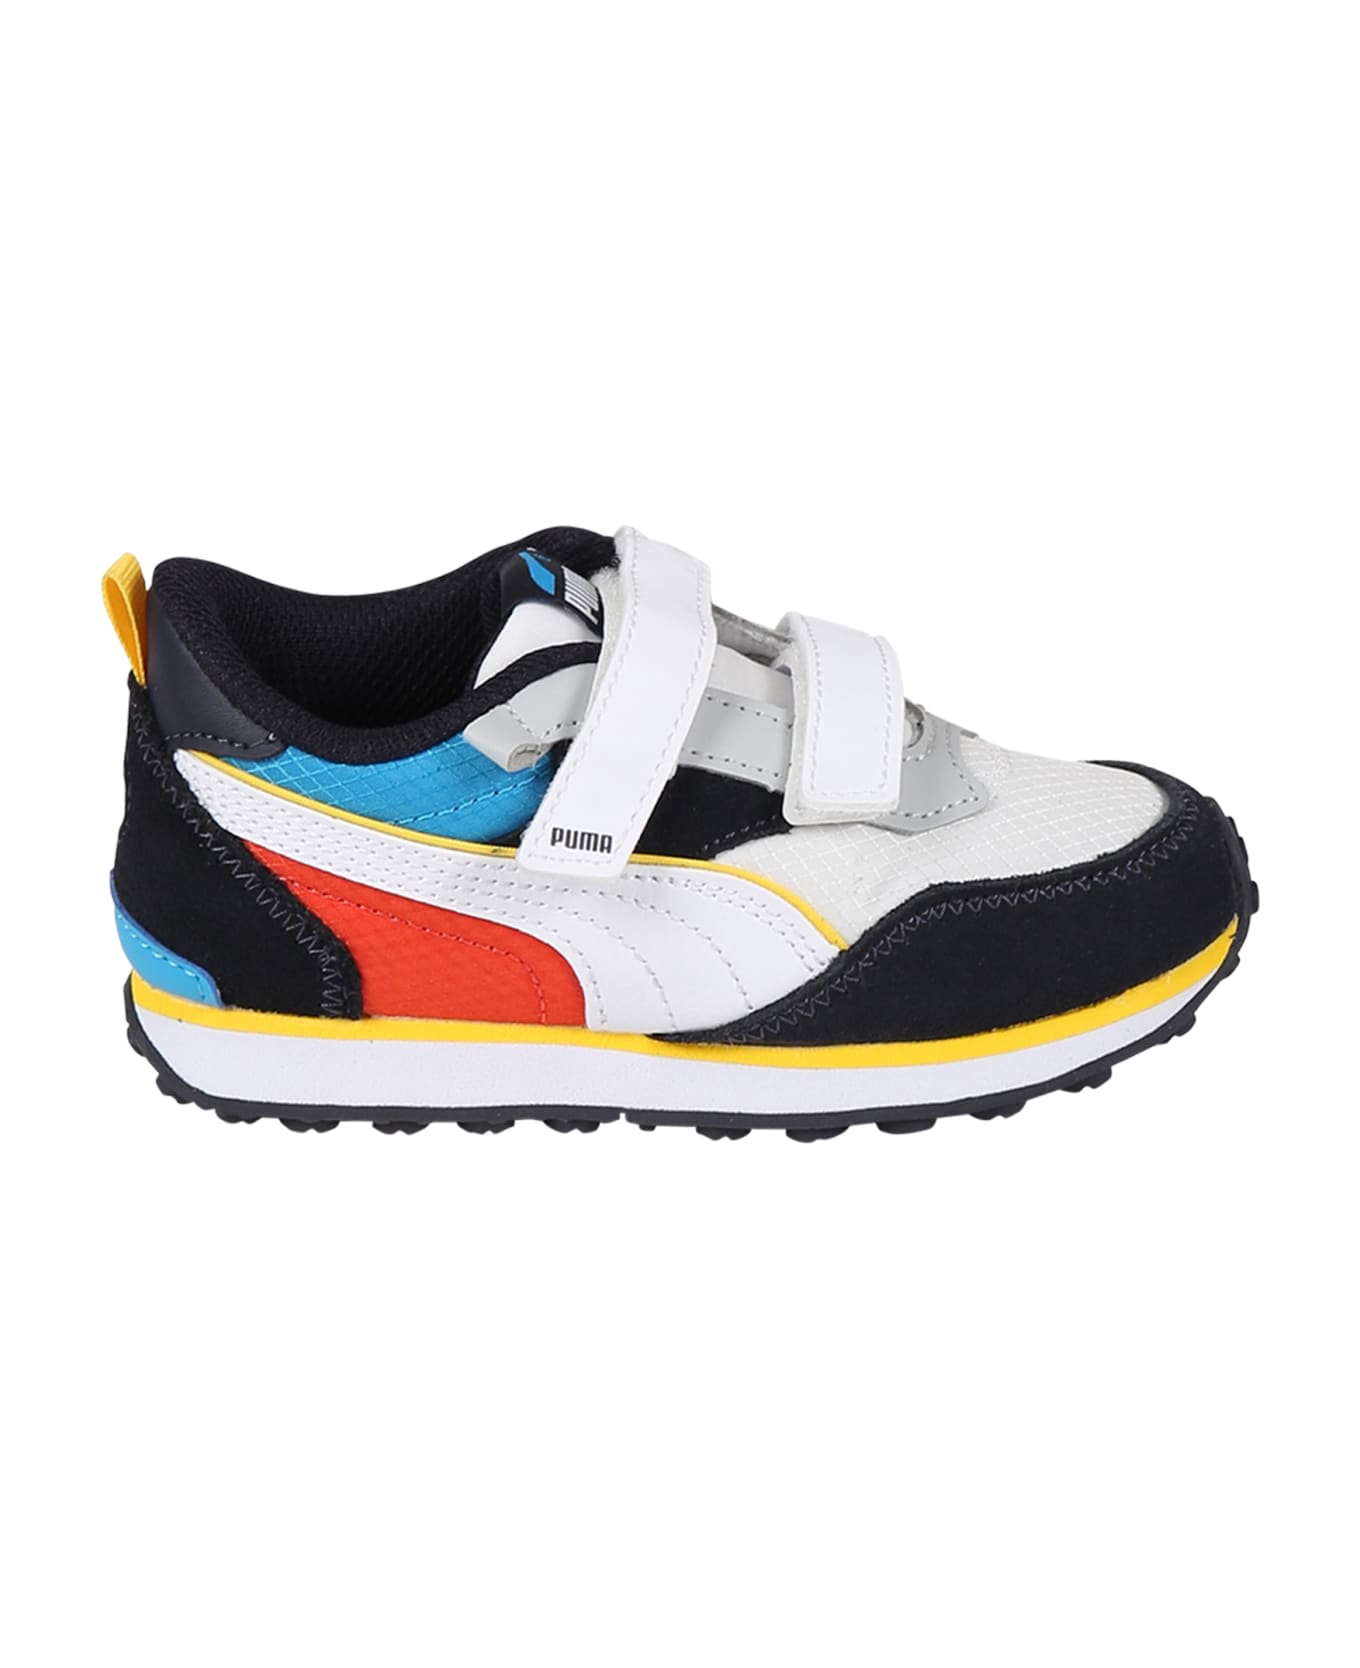 Puma Multicolor Sneakers For Boy With Logo - Multicolor シューズ